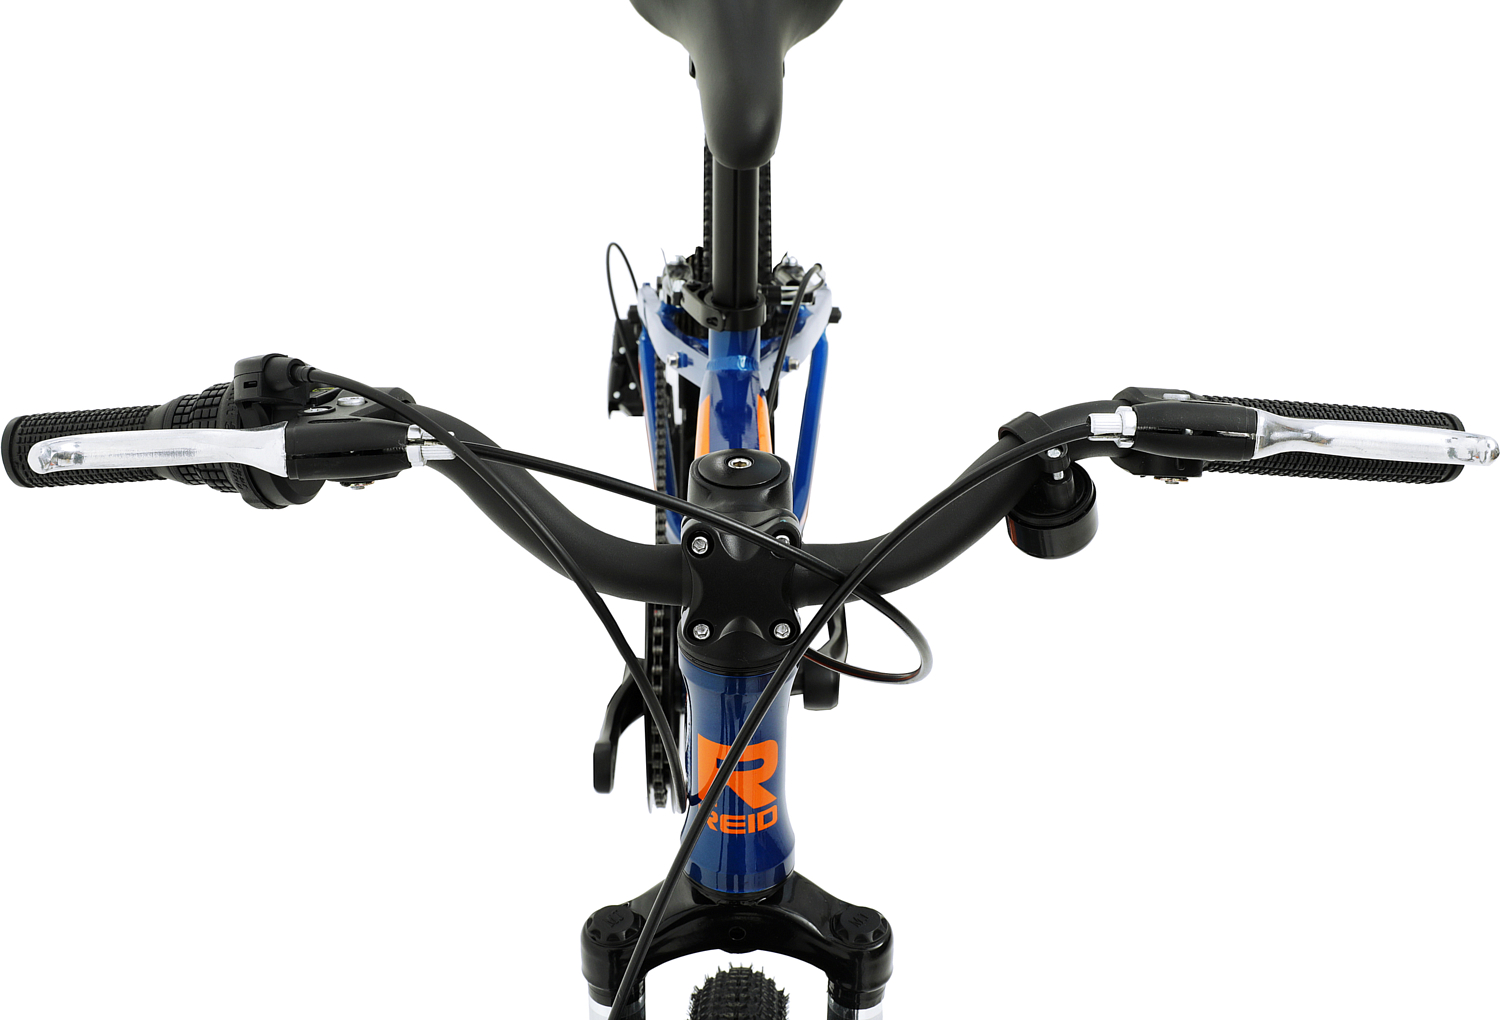 Велосипед Reid Scout 20 2022 Blue Orange